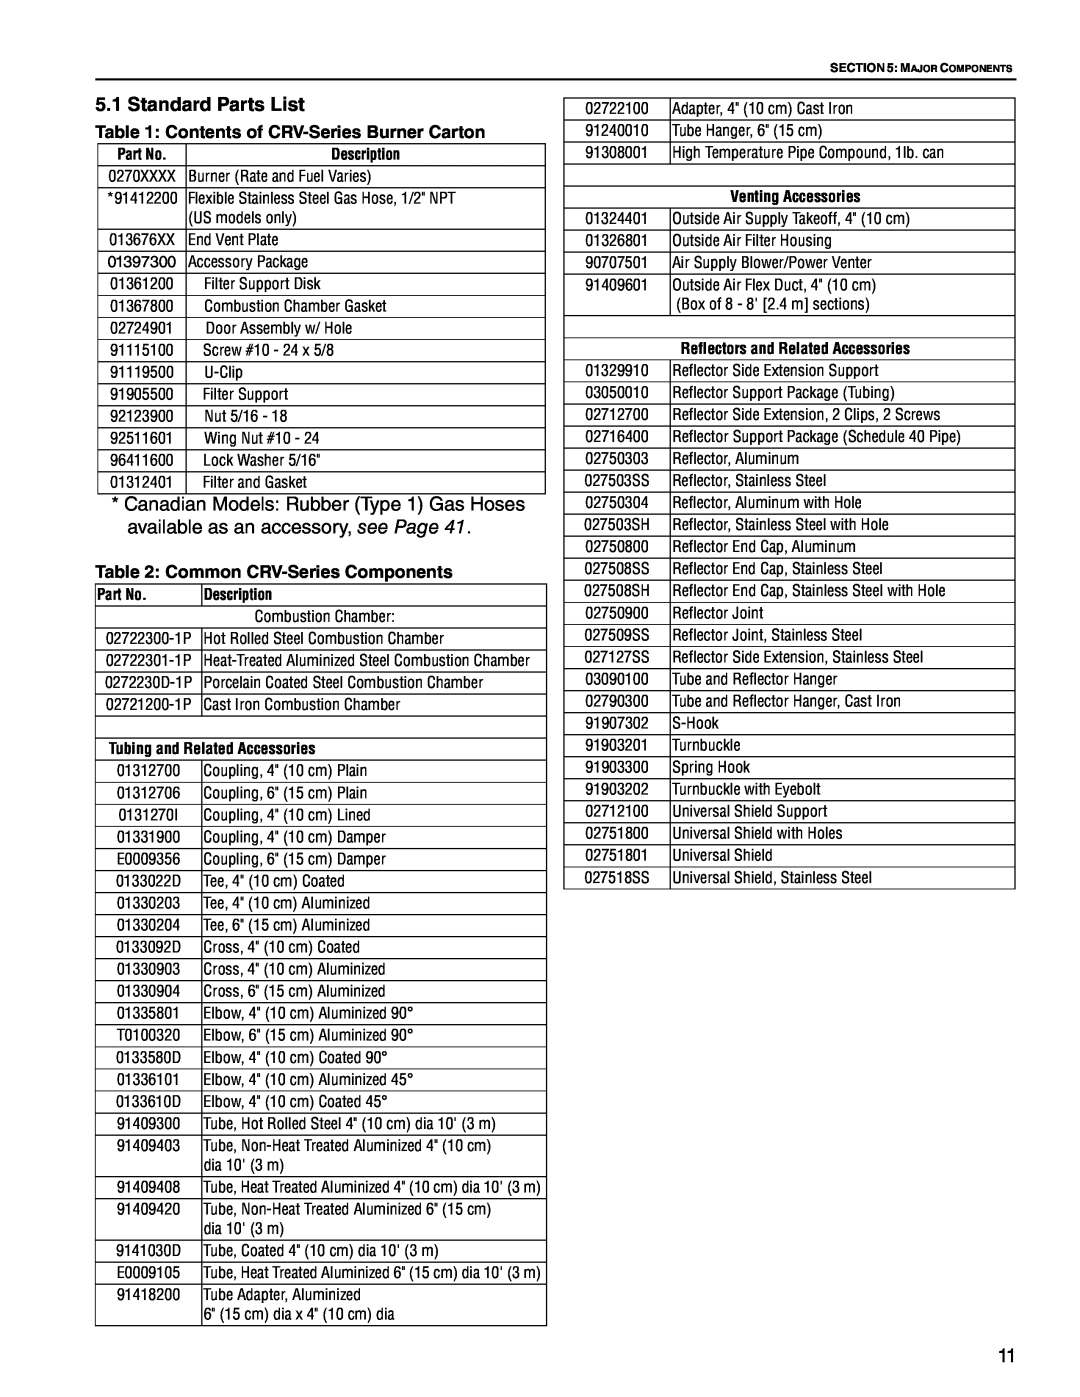 Roberts Gorden CRV-B-9 Standard Parts List, Contents of CRV-SeriesBurner Carton, Common CRV-SeriesComponents, Part No 